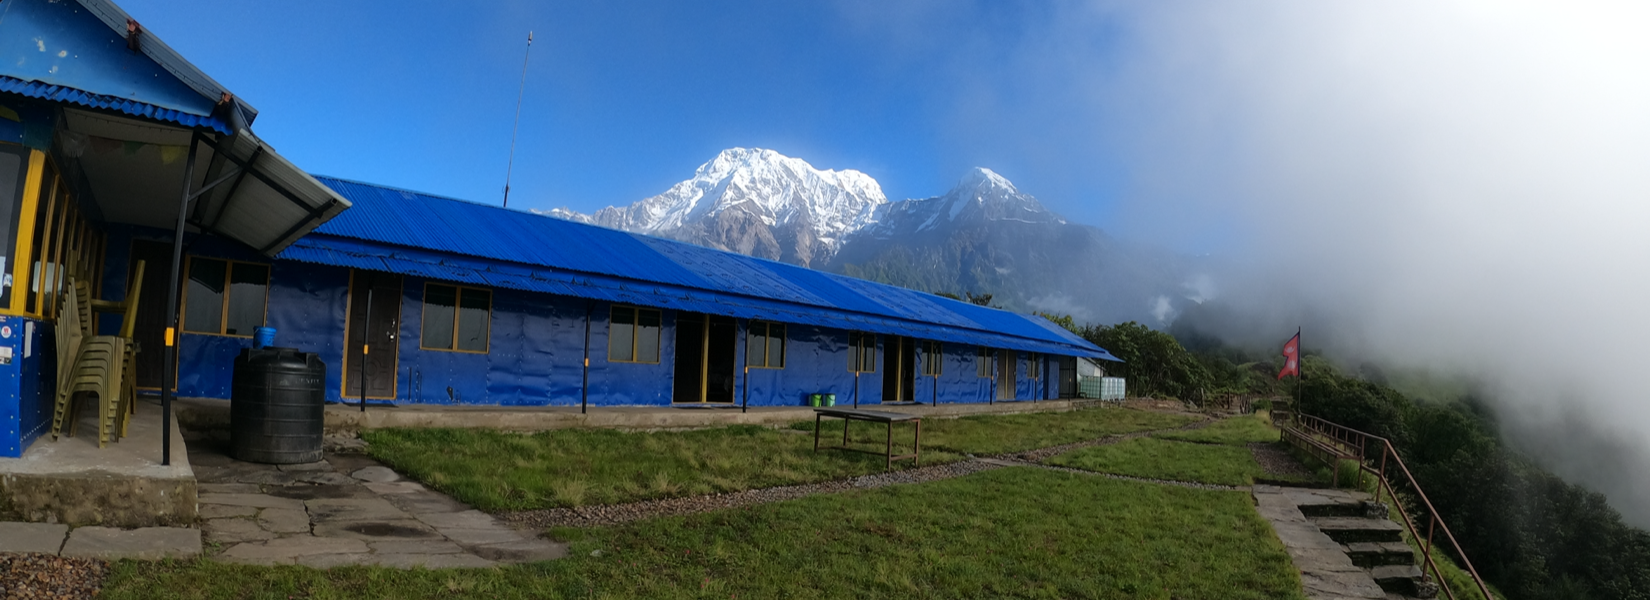 what is tea house nepal trekking looks like